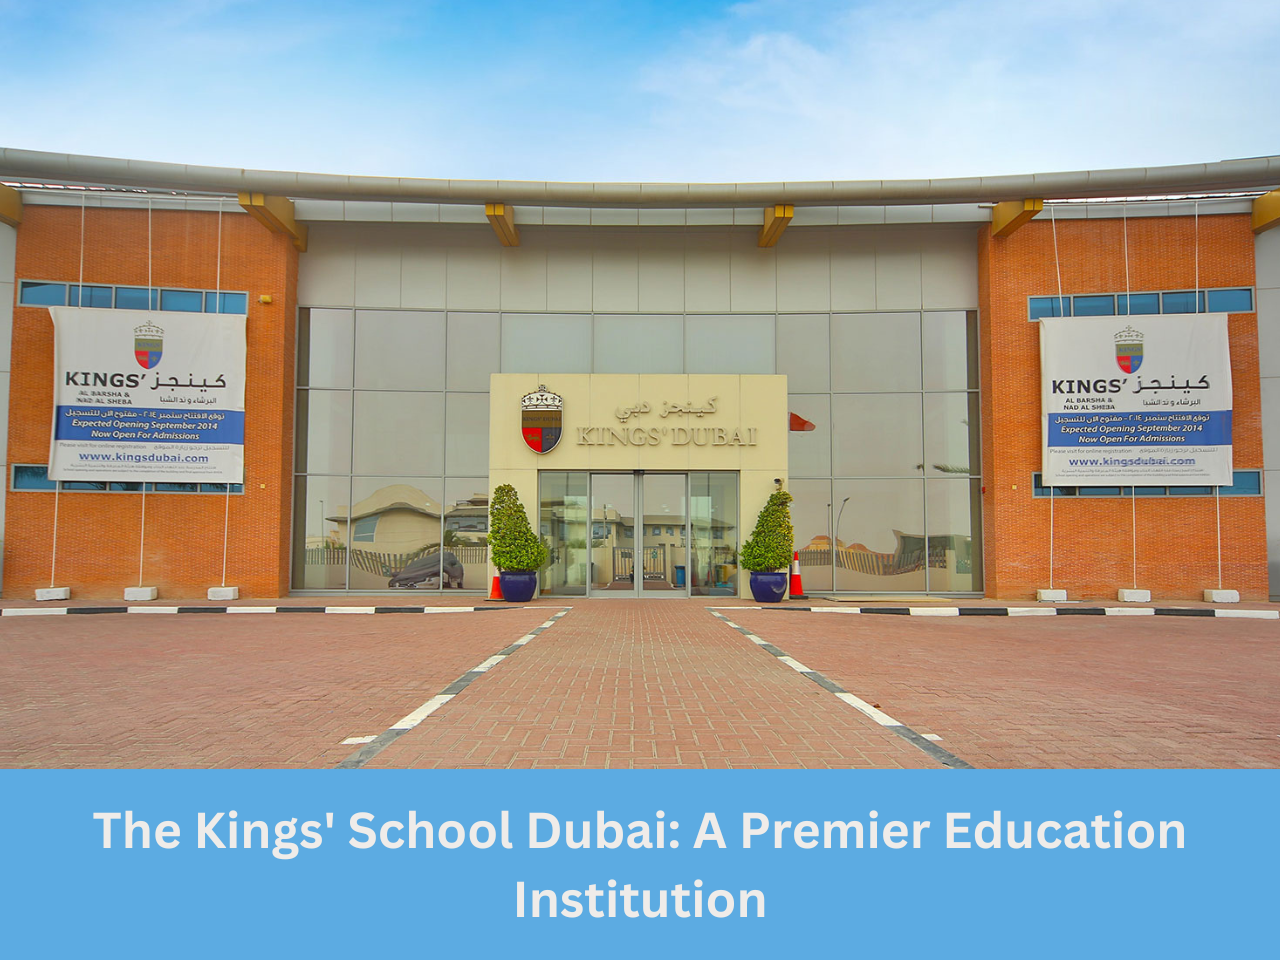 The Kings' School Dubai: A Premier Education Institution